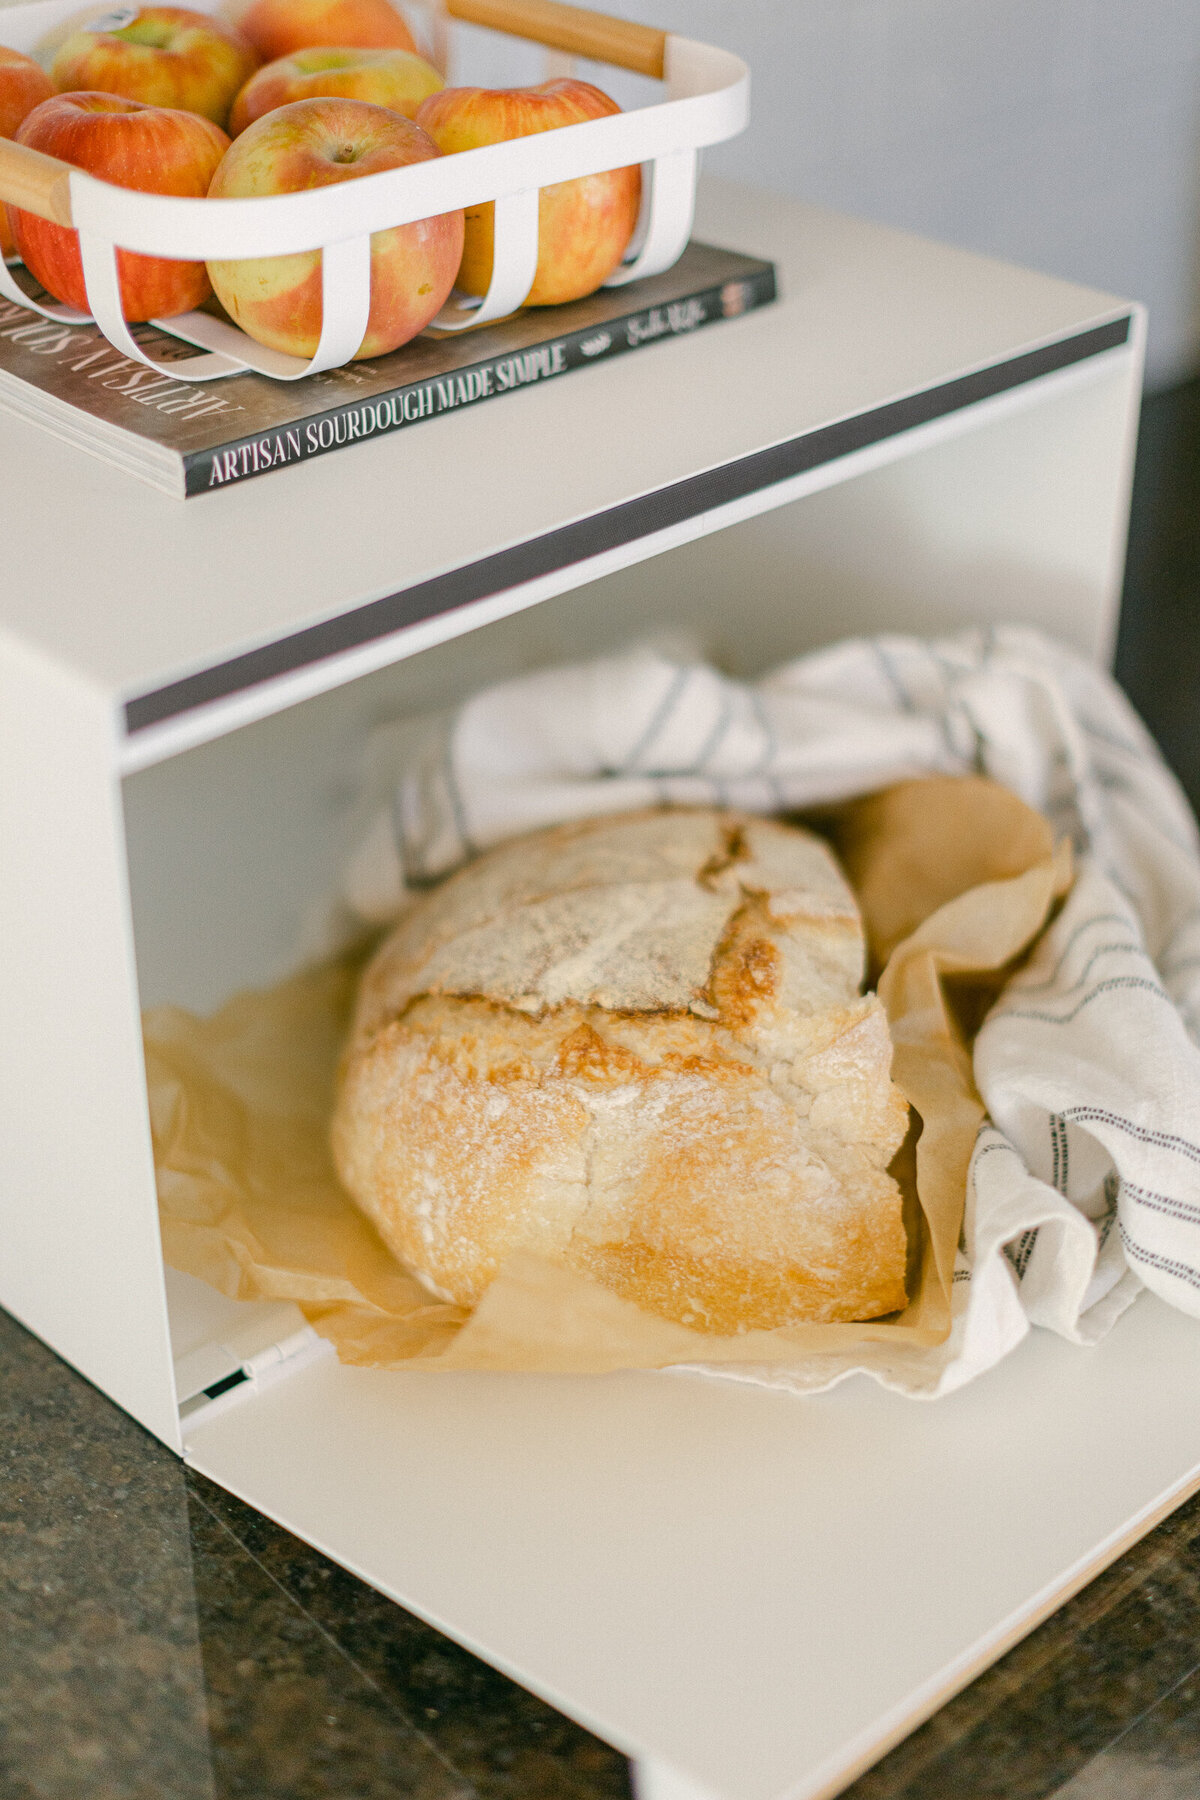 yamazaki-home-bread-box